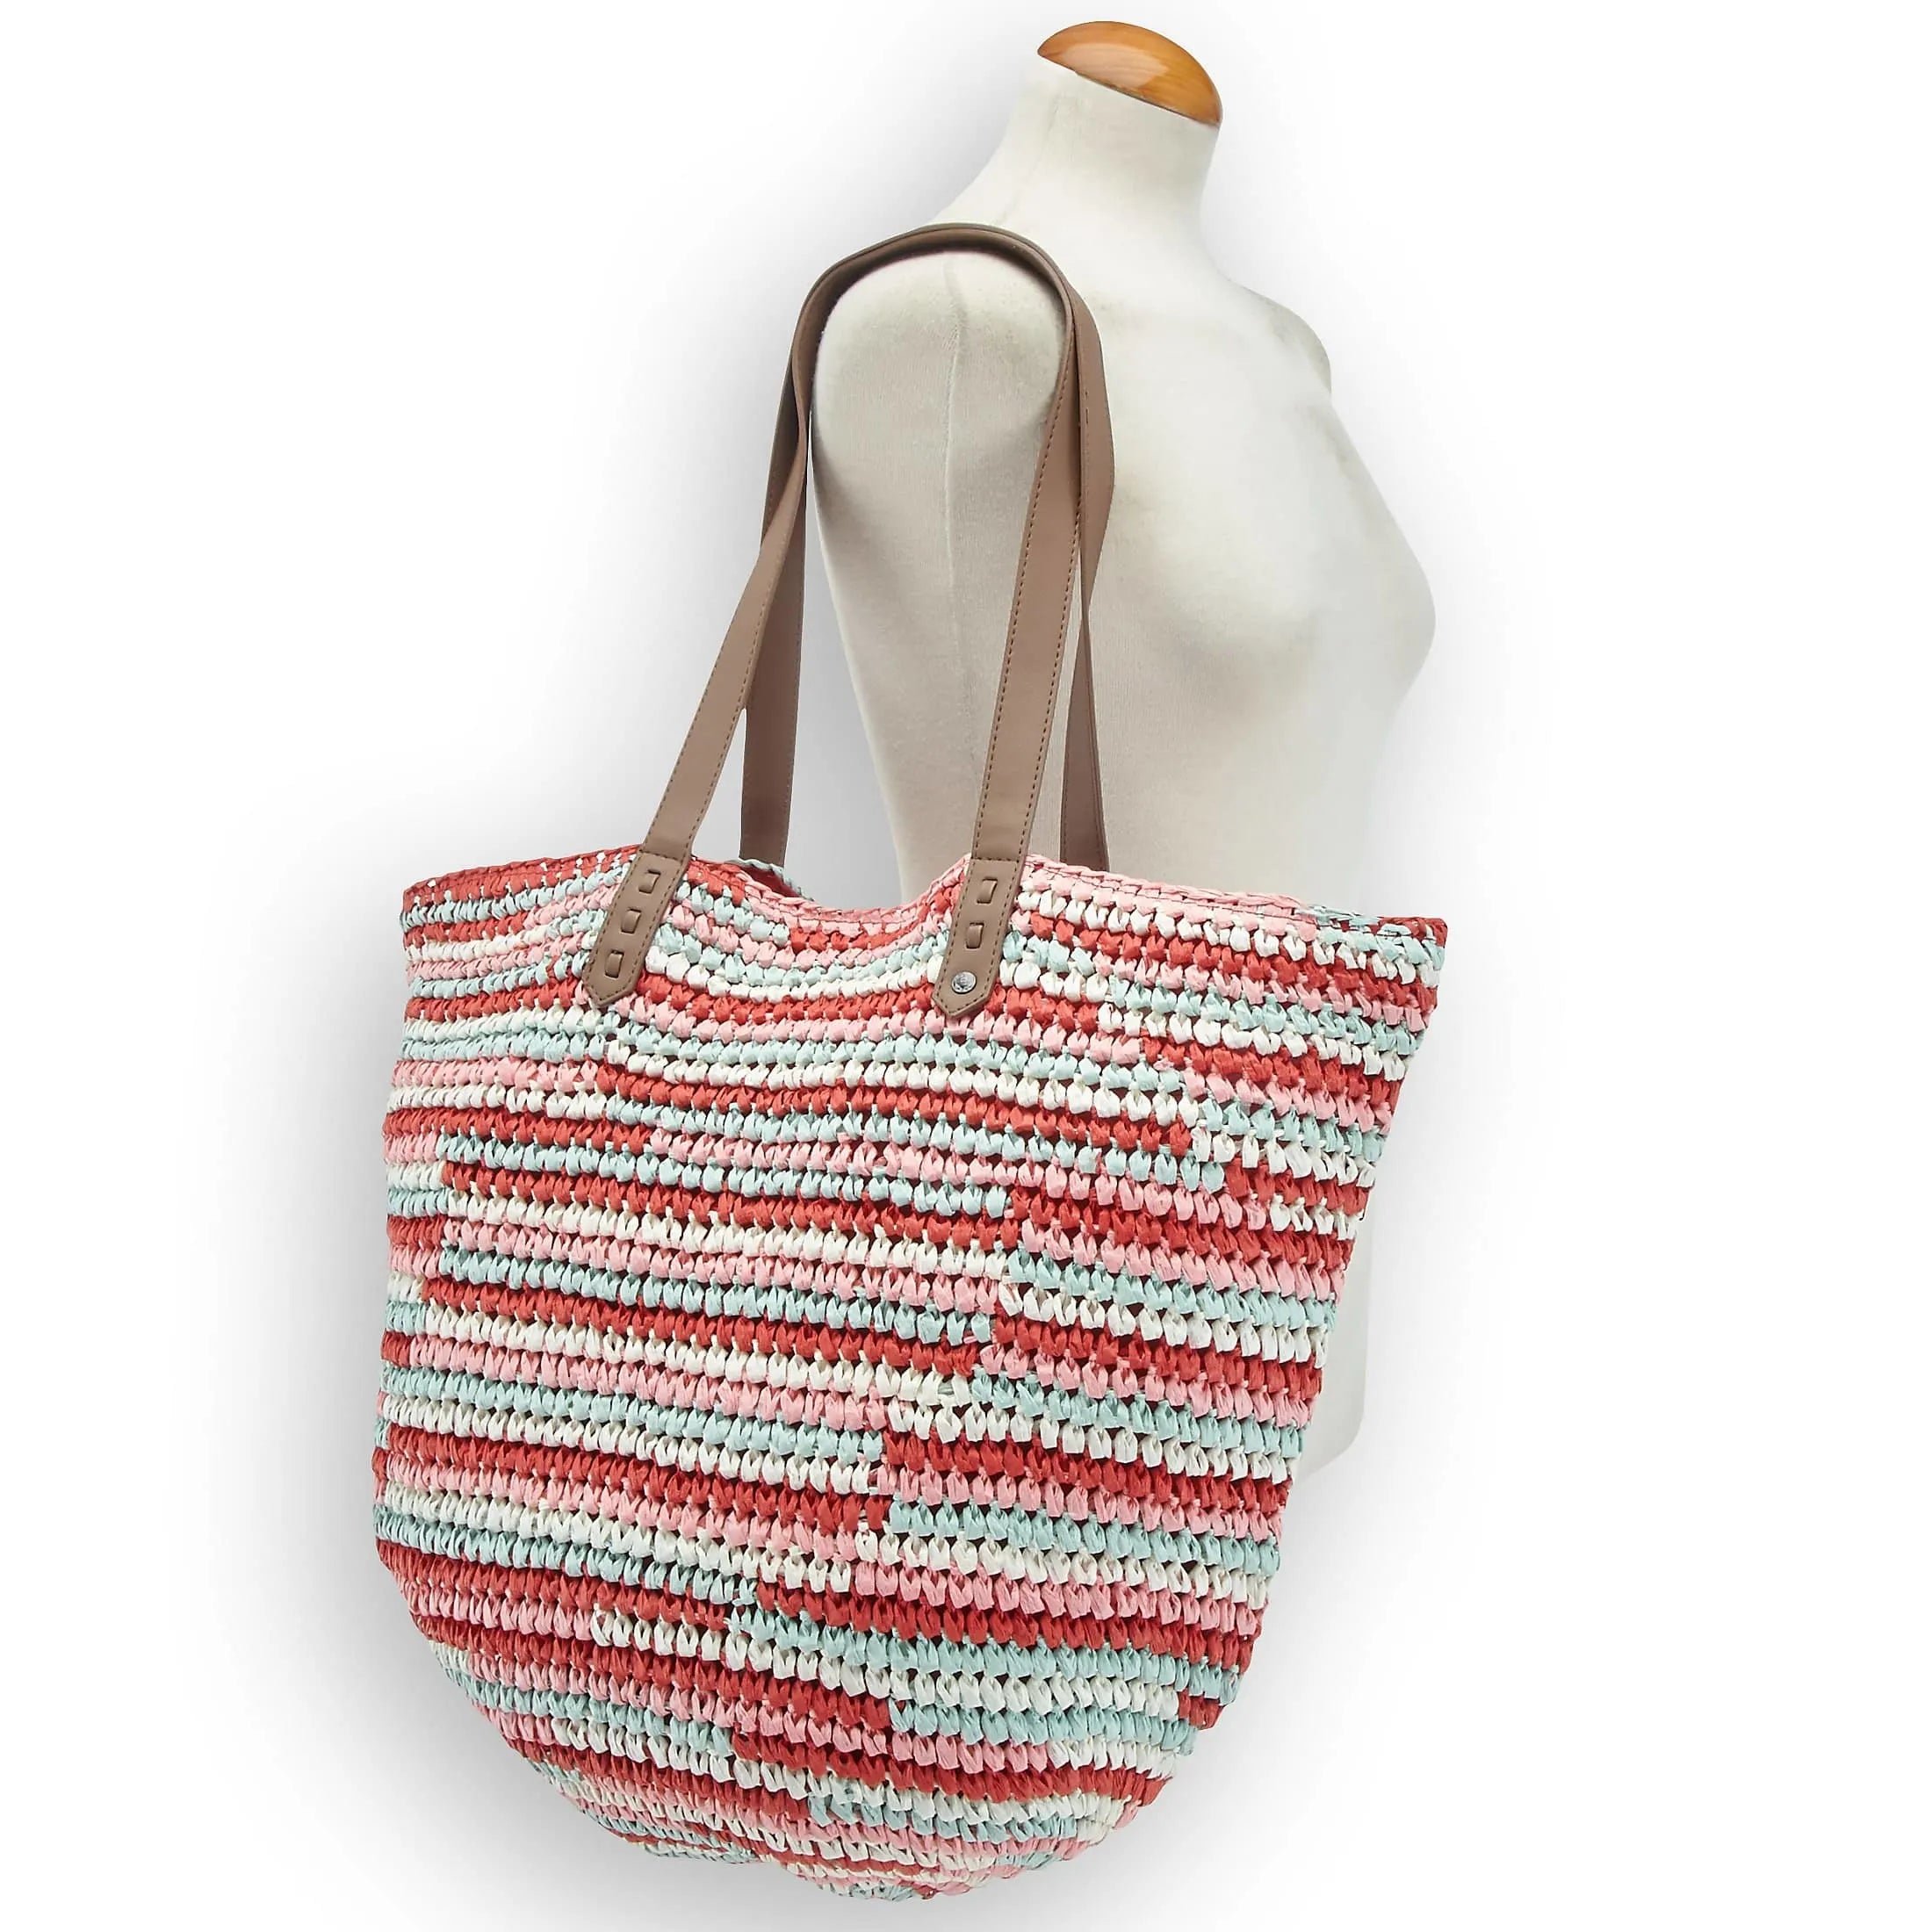 Chiemsee Sports & Travel Bags Straw Beach Bag 56 cm - apricot blush